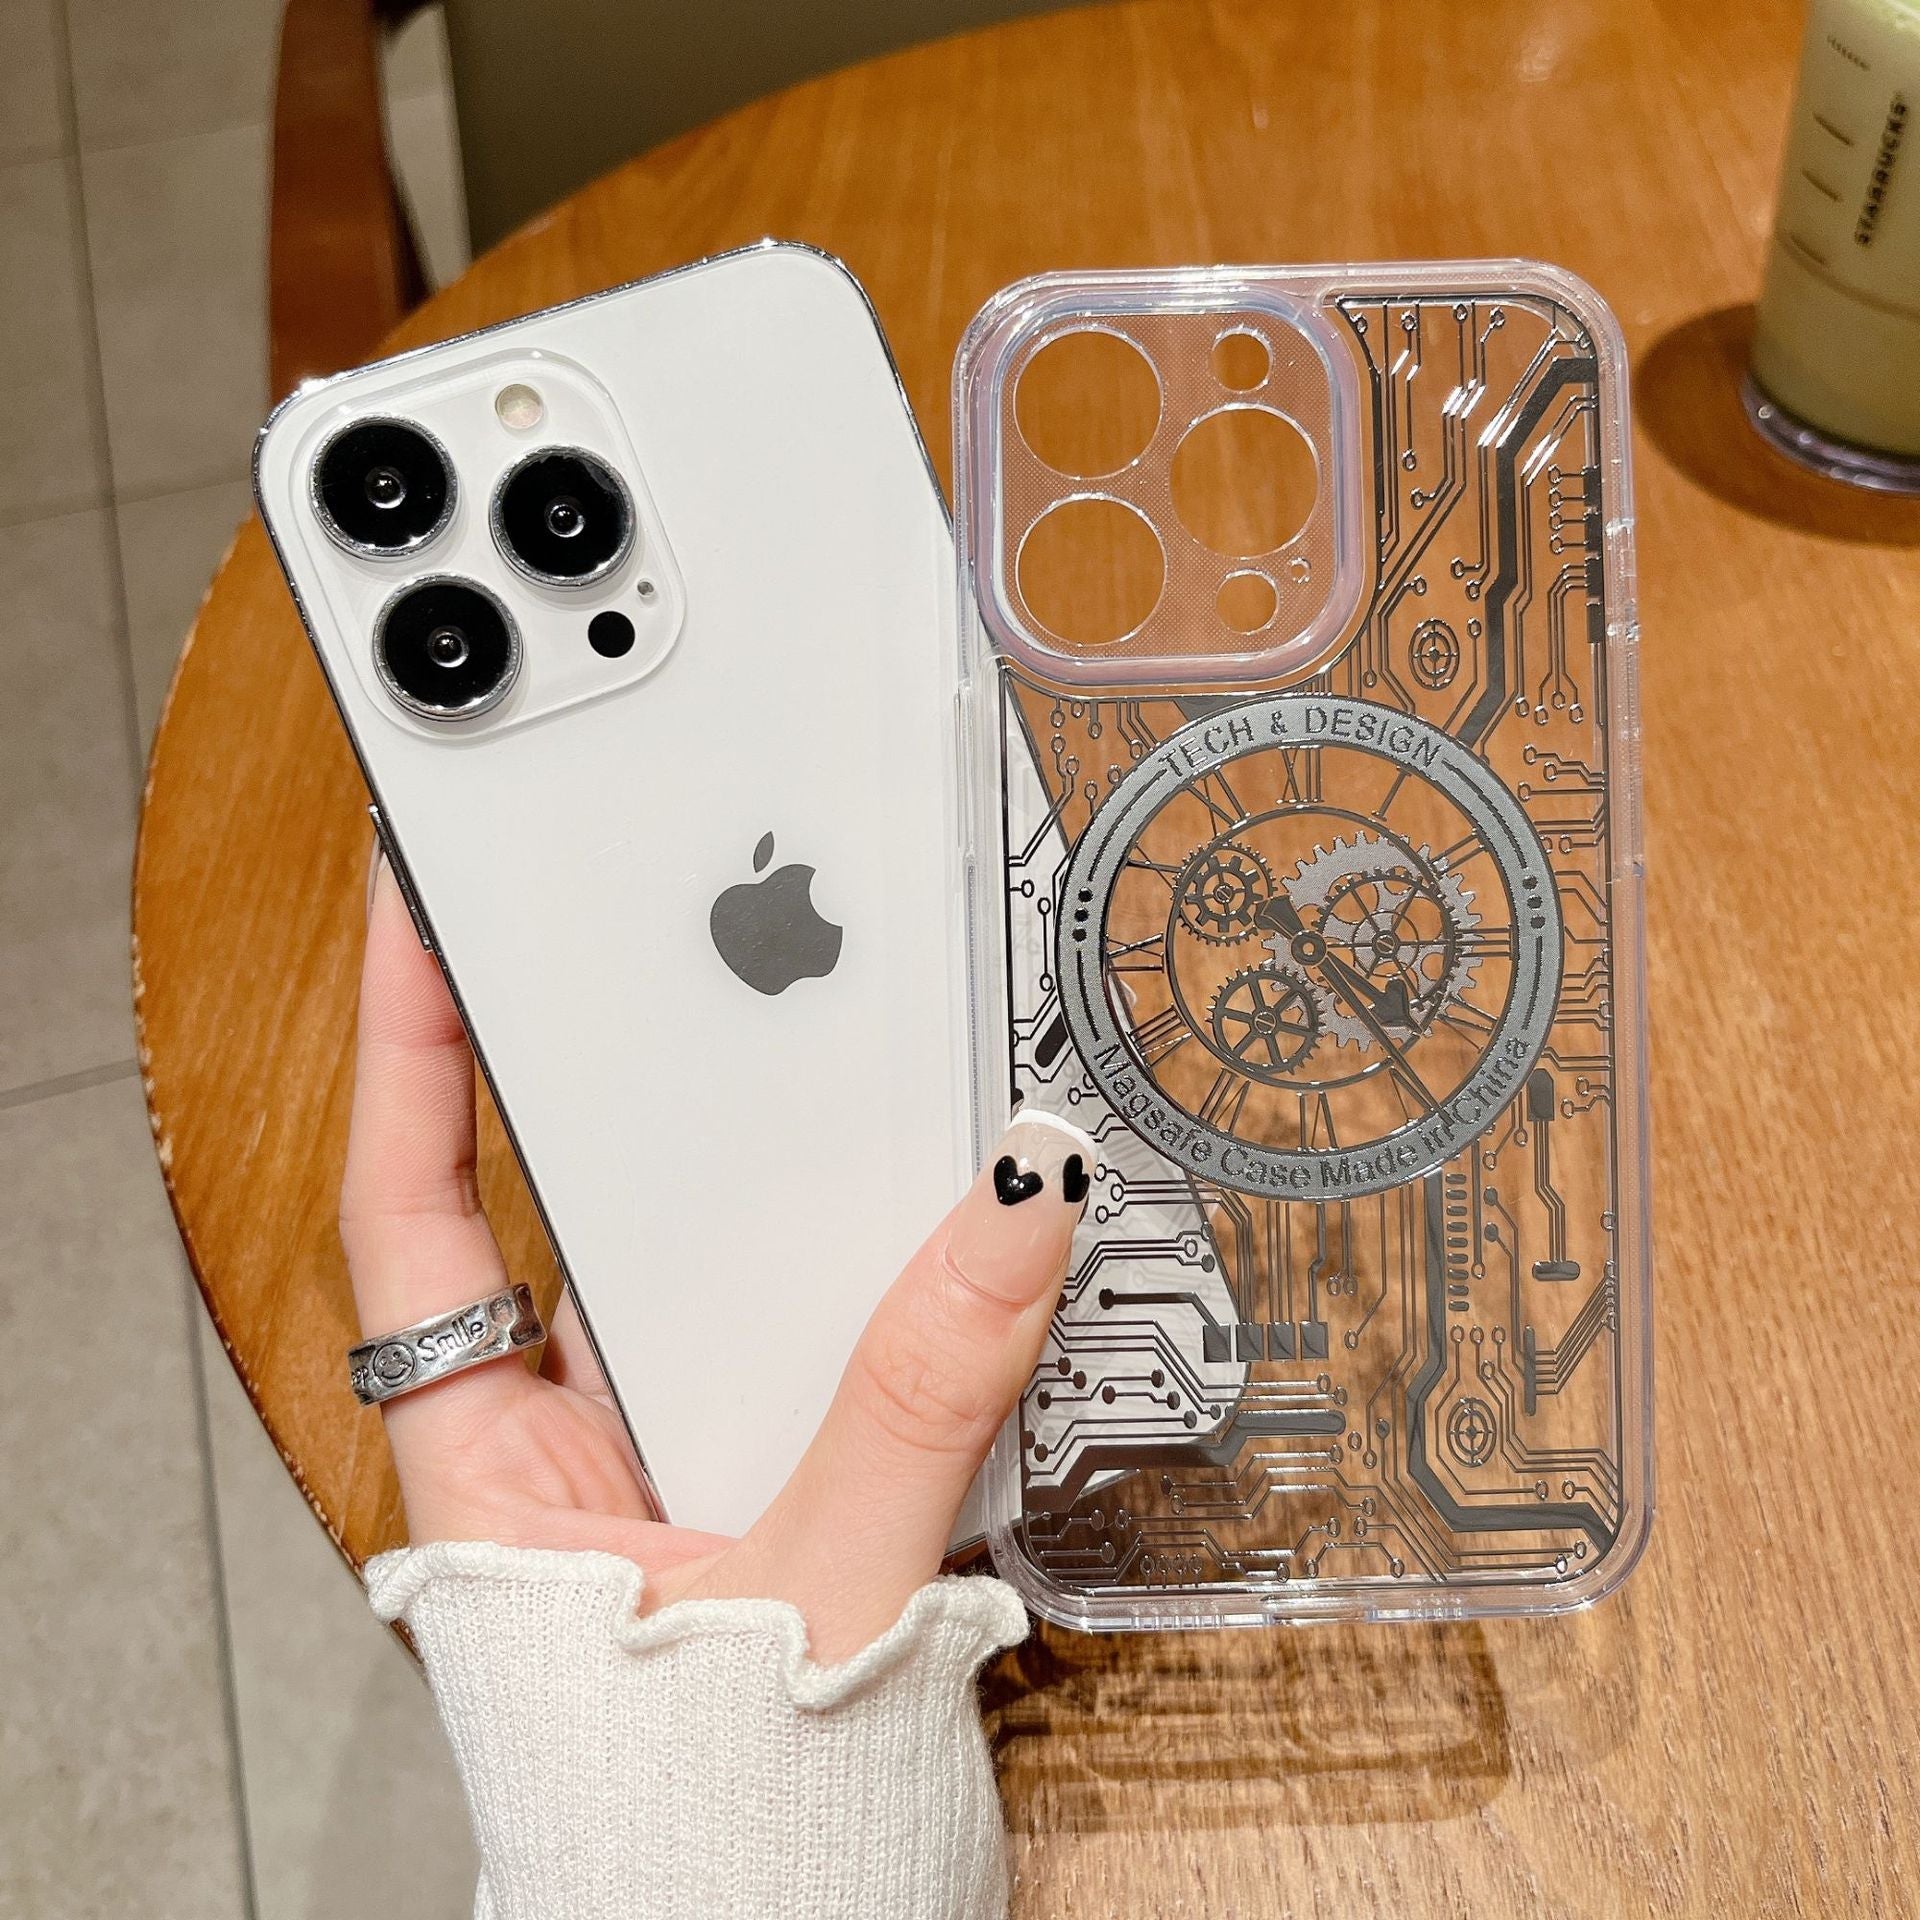 Transparent Mechanical Watch Case iPhone 13 Pro